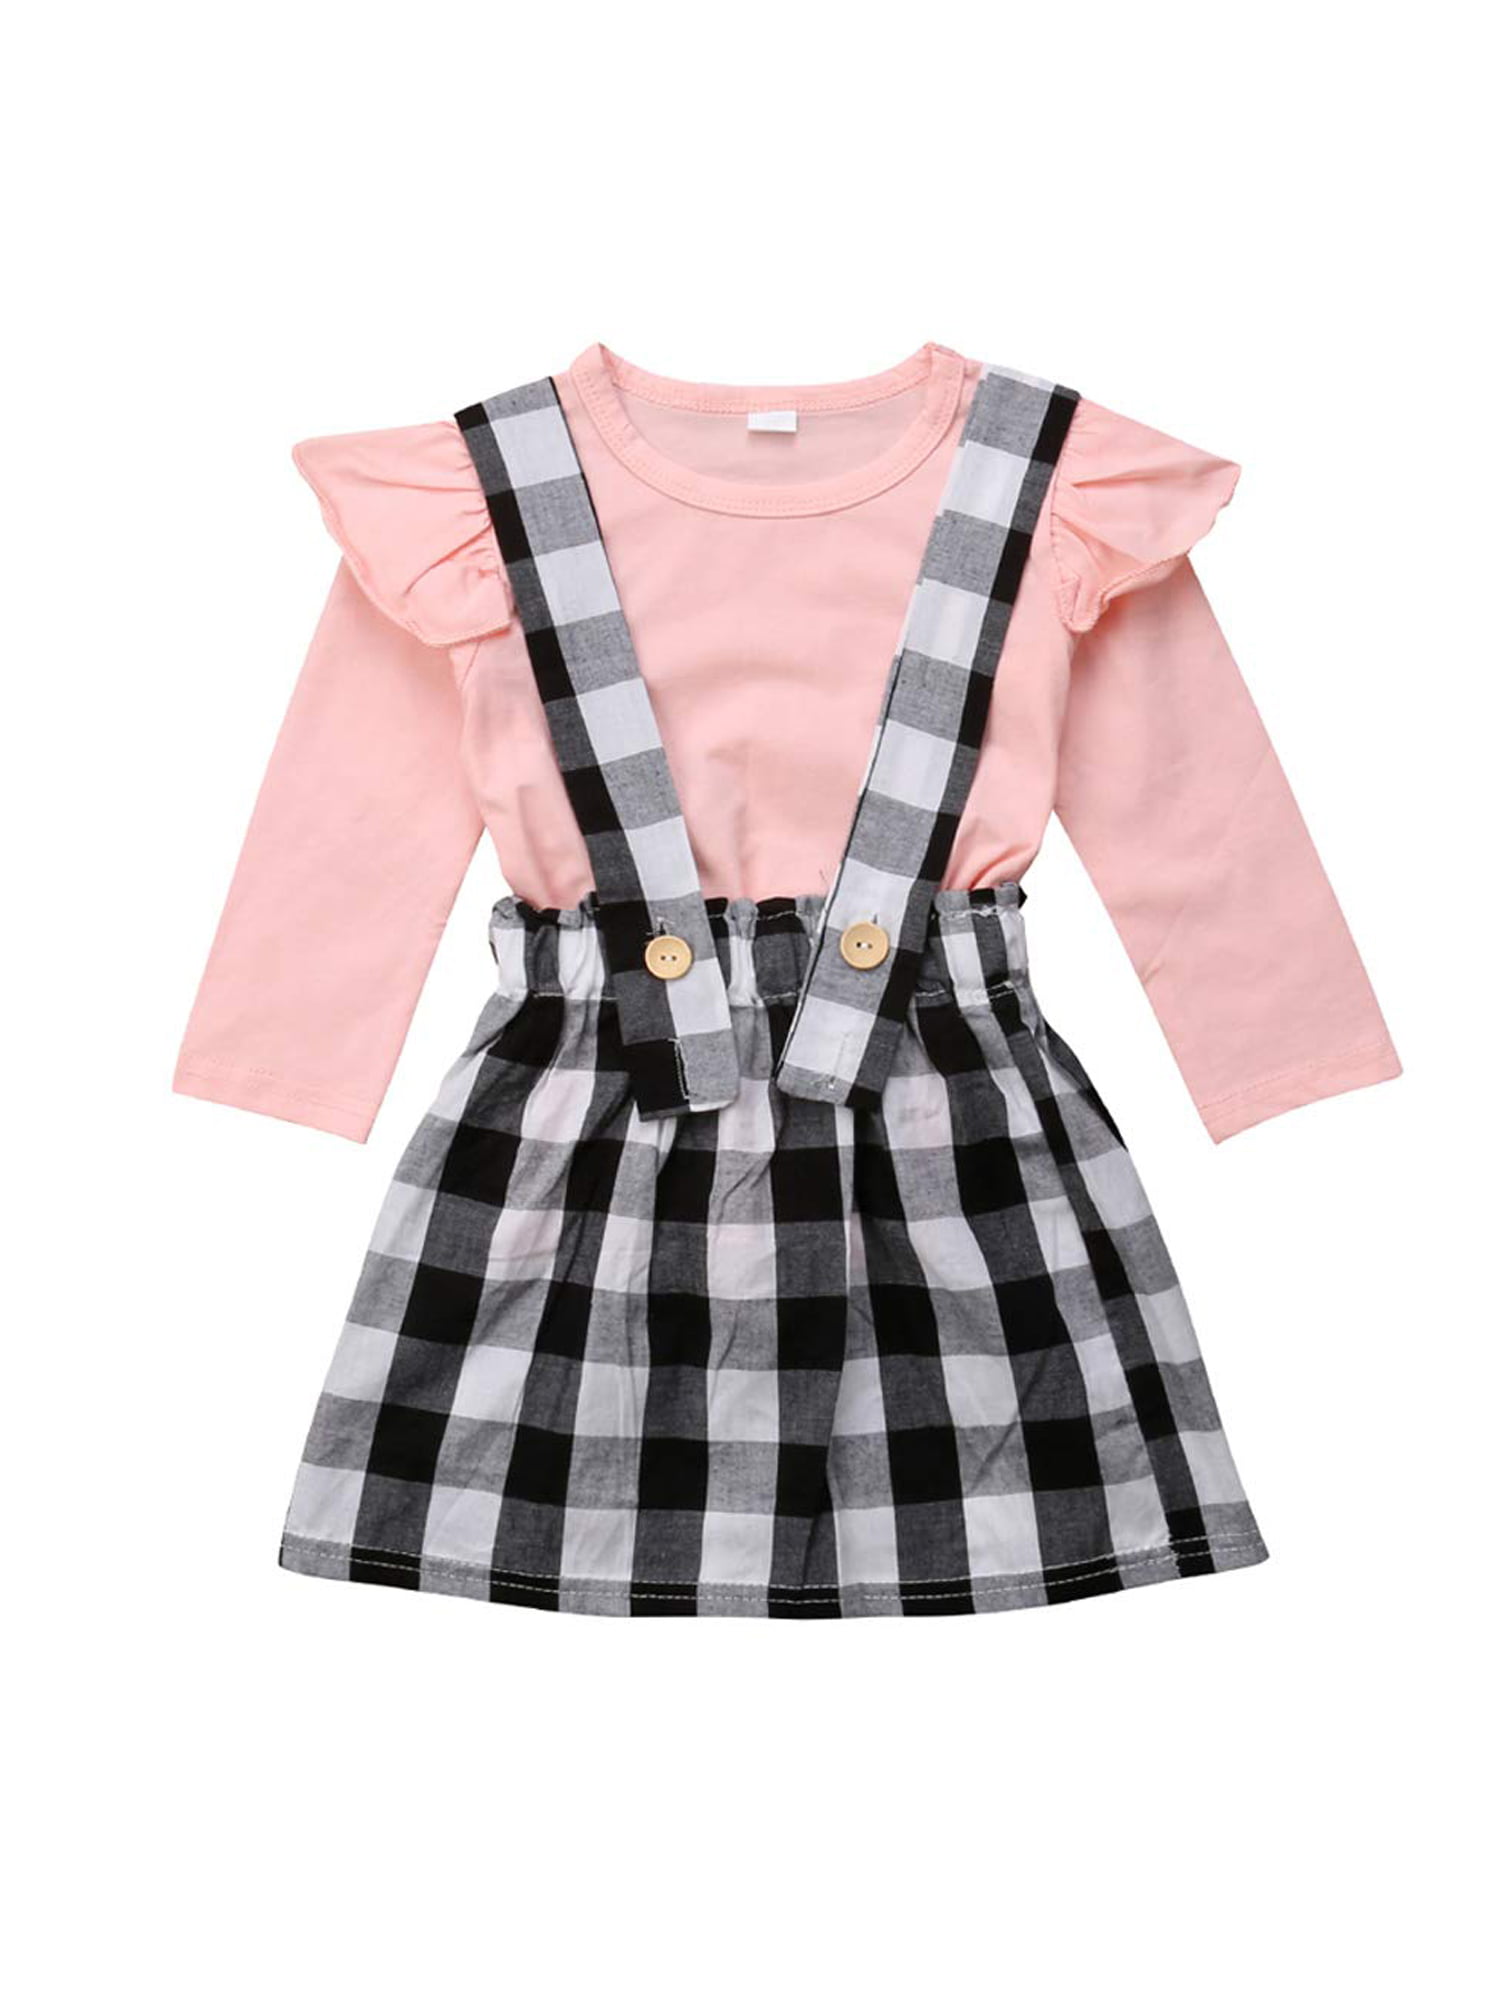 Toddler Outfits Girl Clothes Summer Dots Plaid Bowknot Blouse Shirt Suspender Skirt Set Overall School Uniform Dress